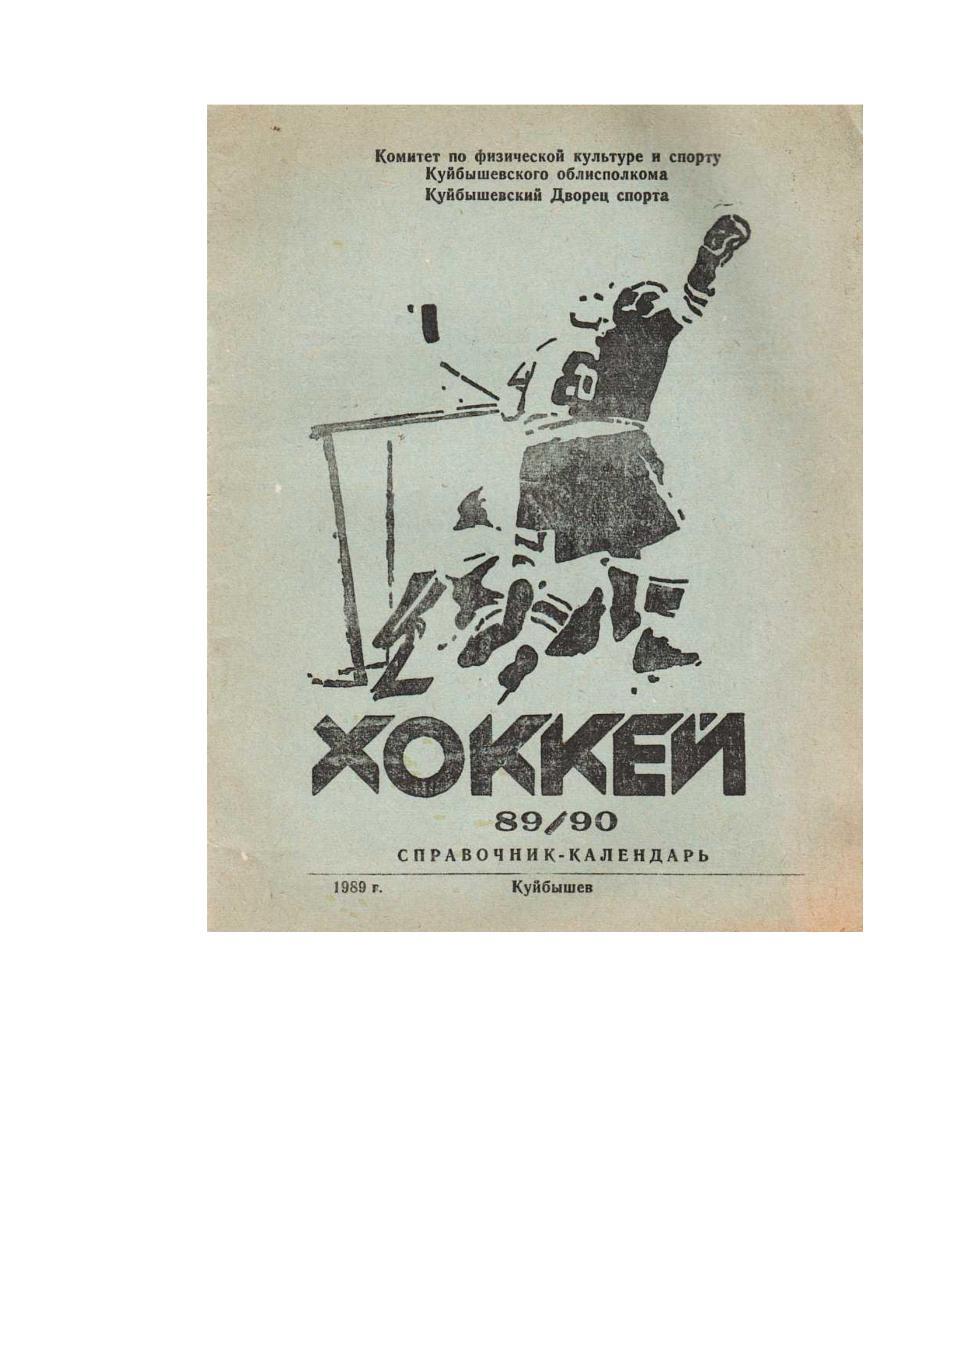 Хоккей 89/90. Справочник-календарь. Куйбышев, 1989.